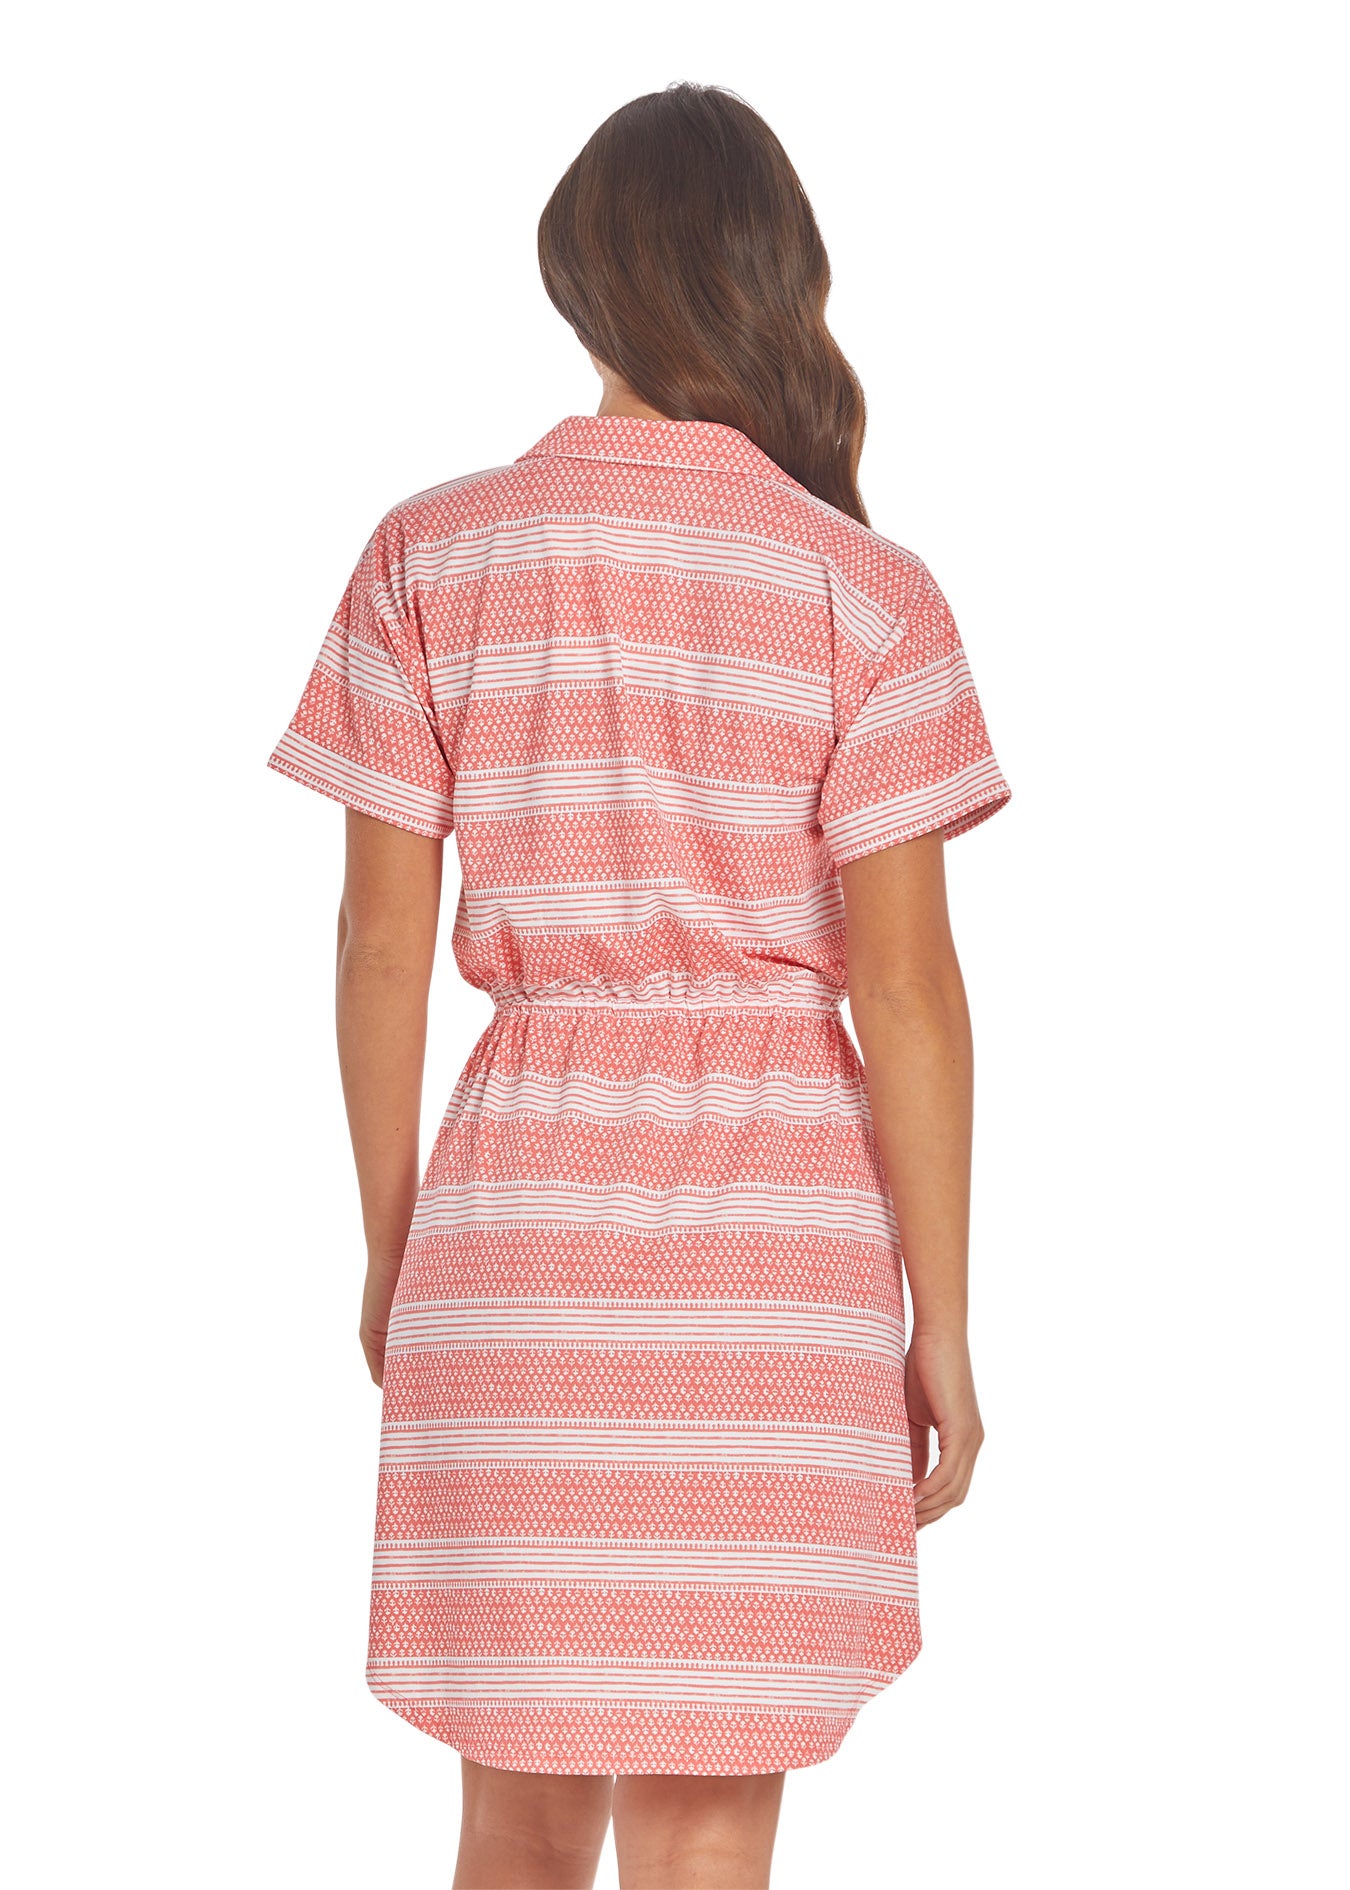 Back of woman wearing Nantucket Shirt Dress